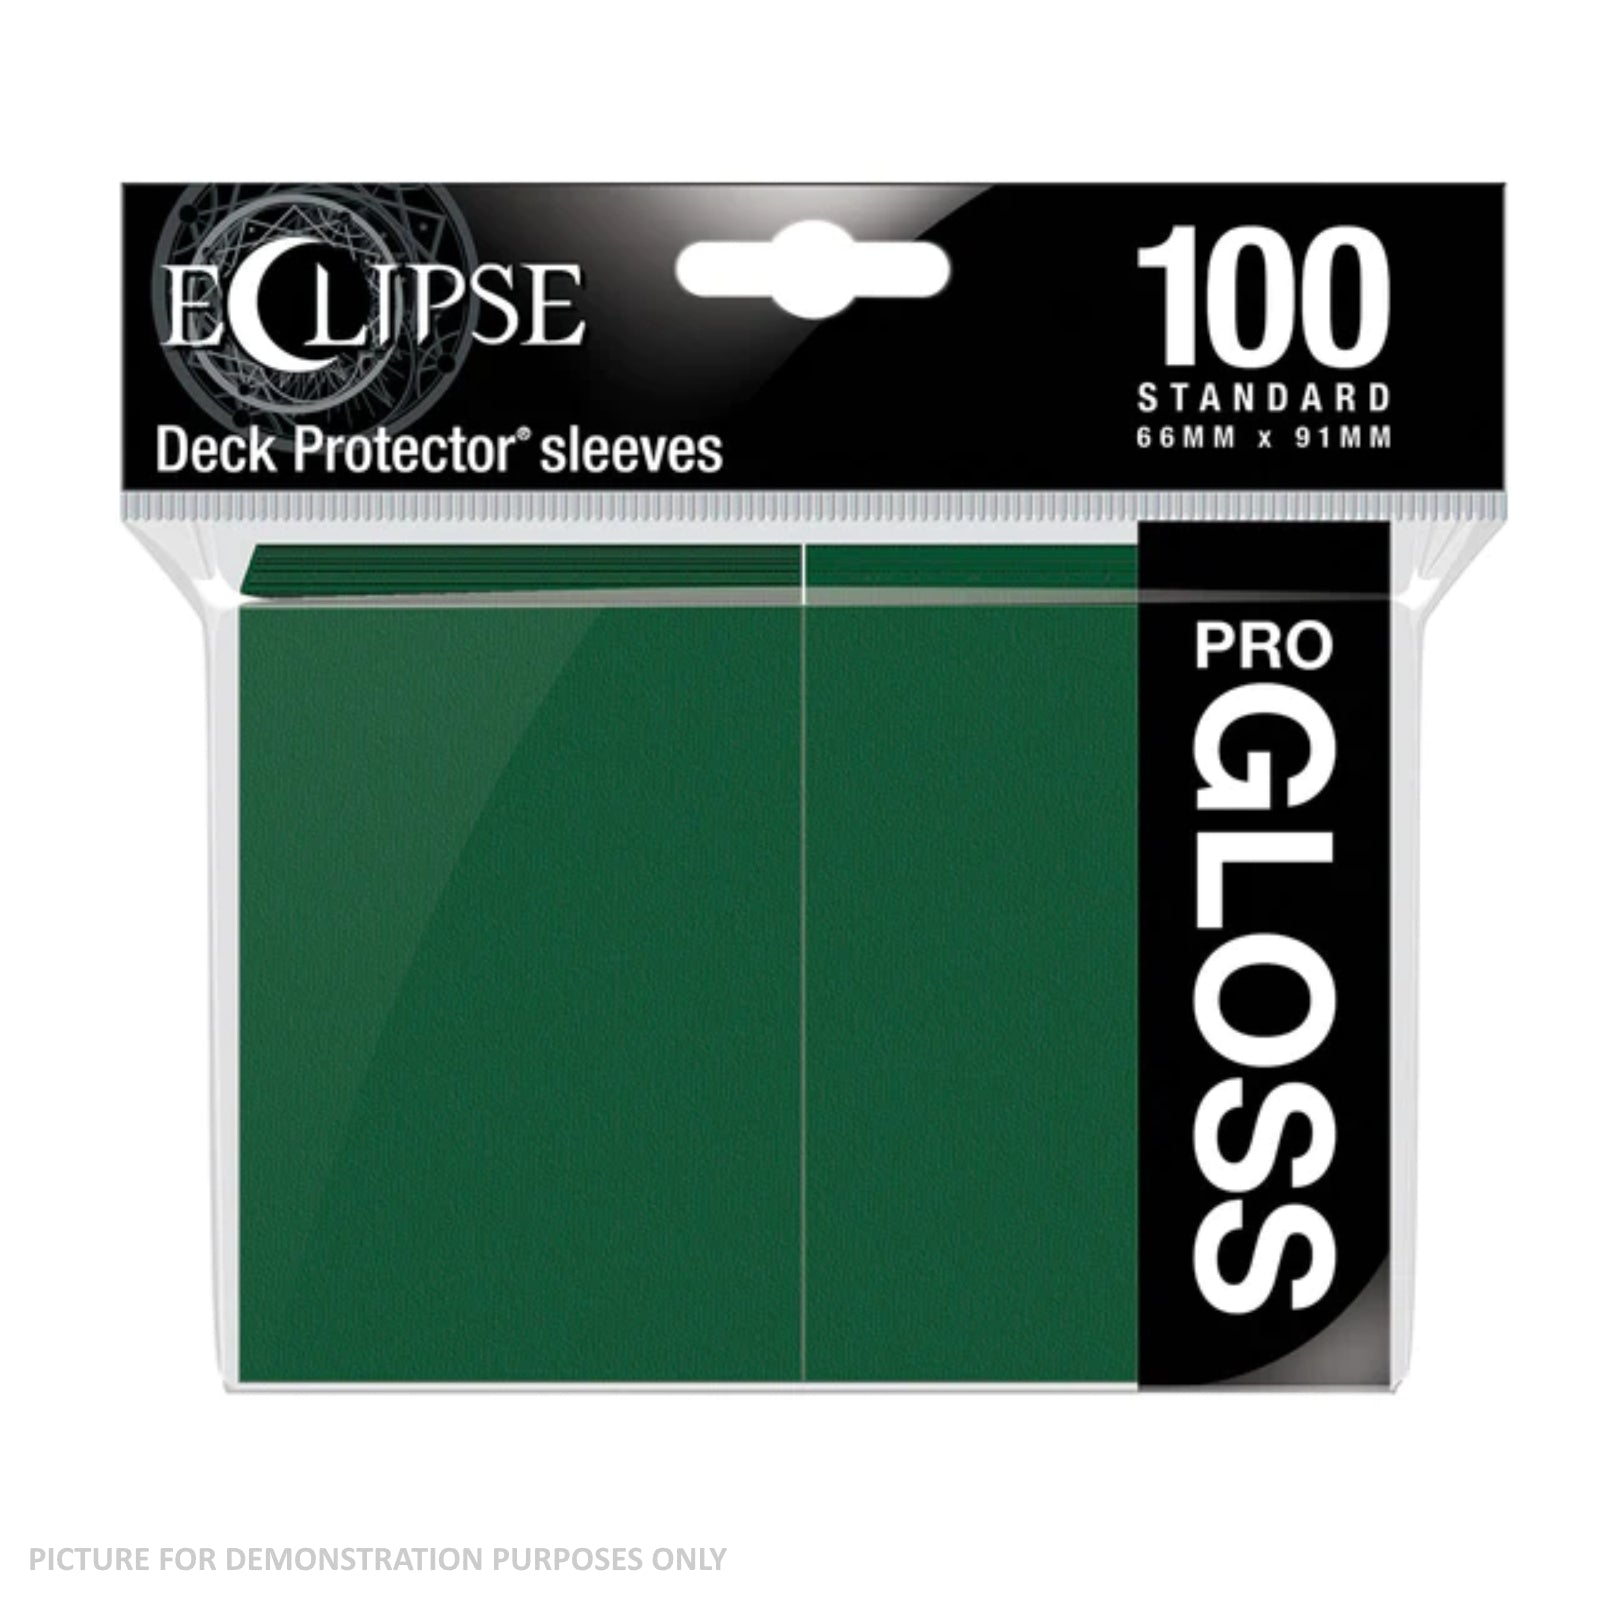 Ultra Pro Eclipse Gloss Standard Deck Protector Sleeves 100ct - Dark Green